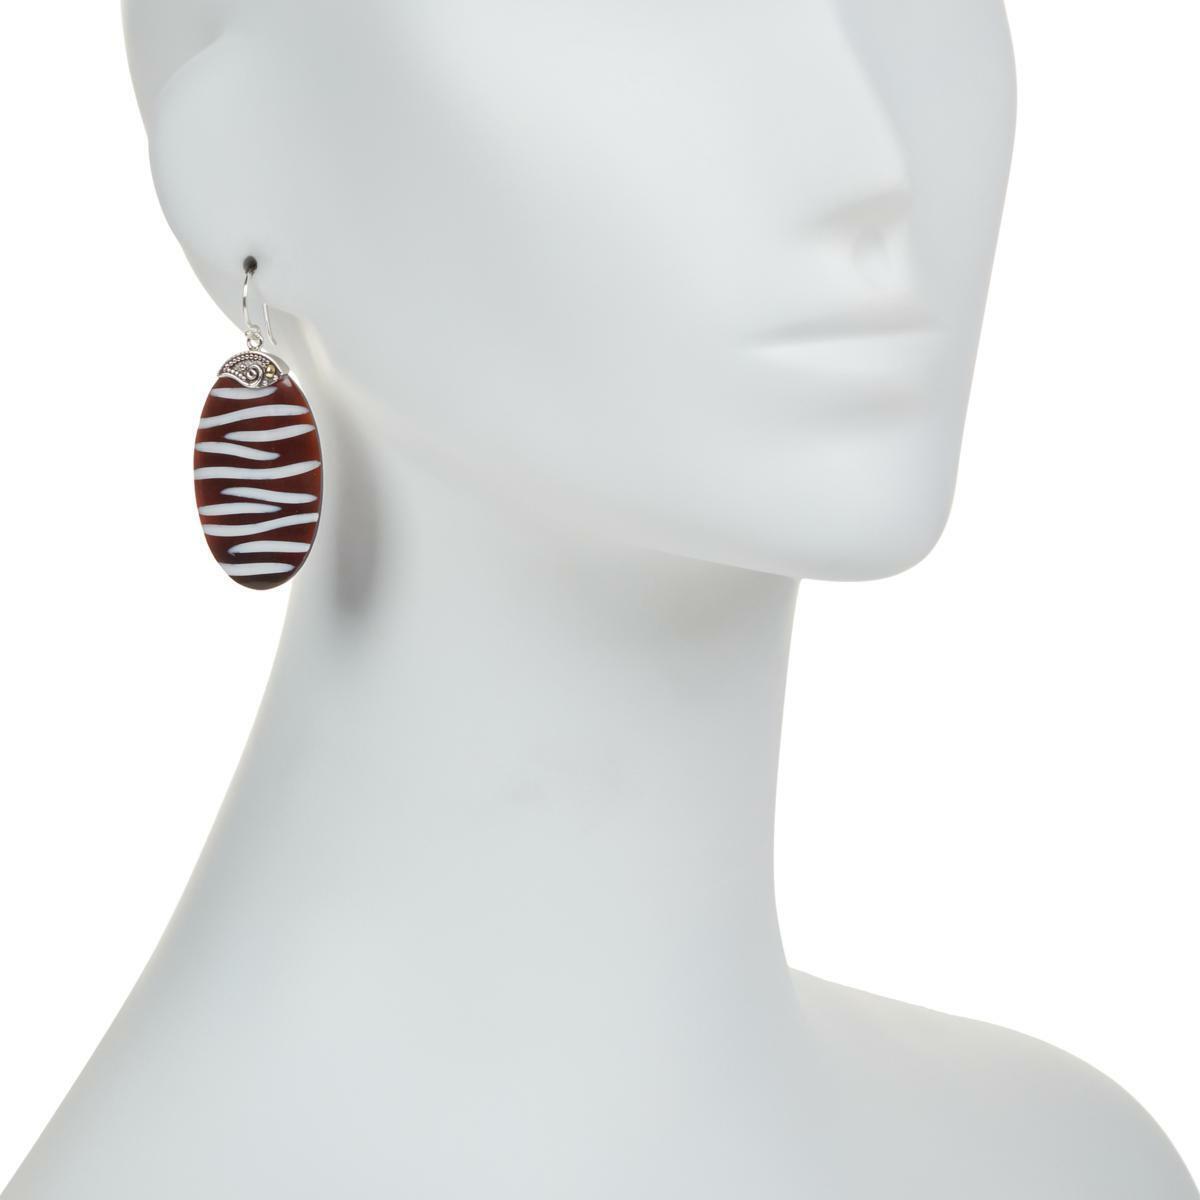 Bali RoManse Sterling Silver & 18K Dark Brown Oval Shell and Resin Drop Earrings